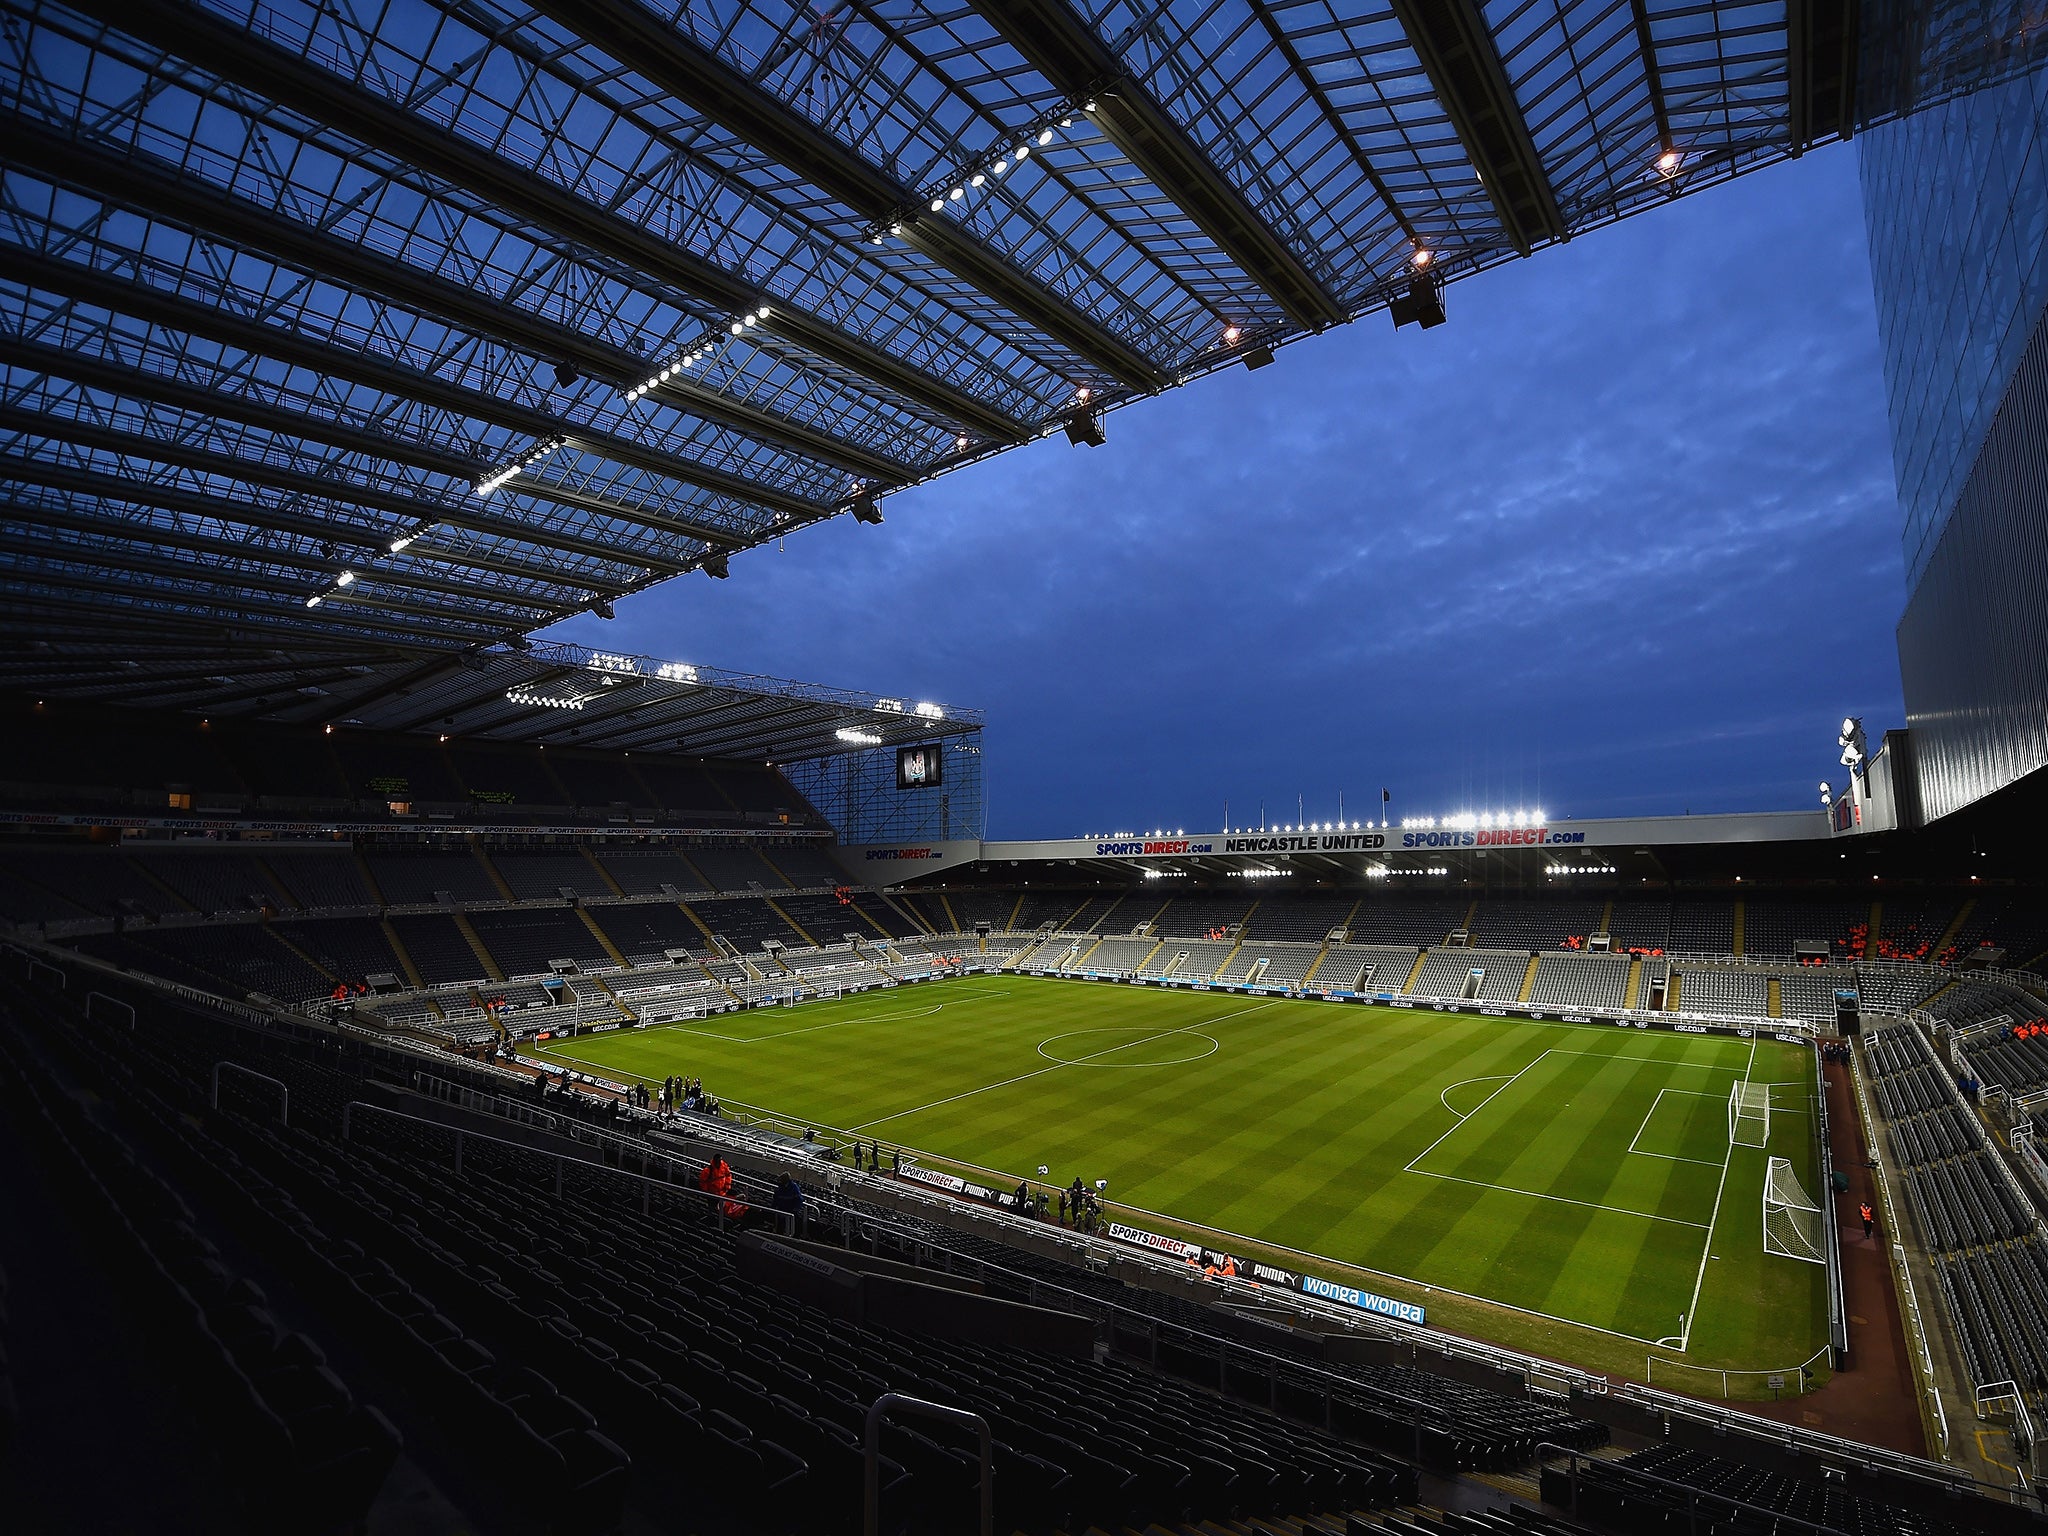 Newcastle United's stadium St. James' Park